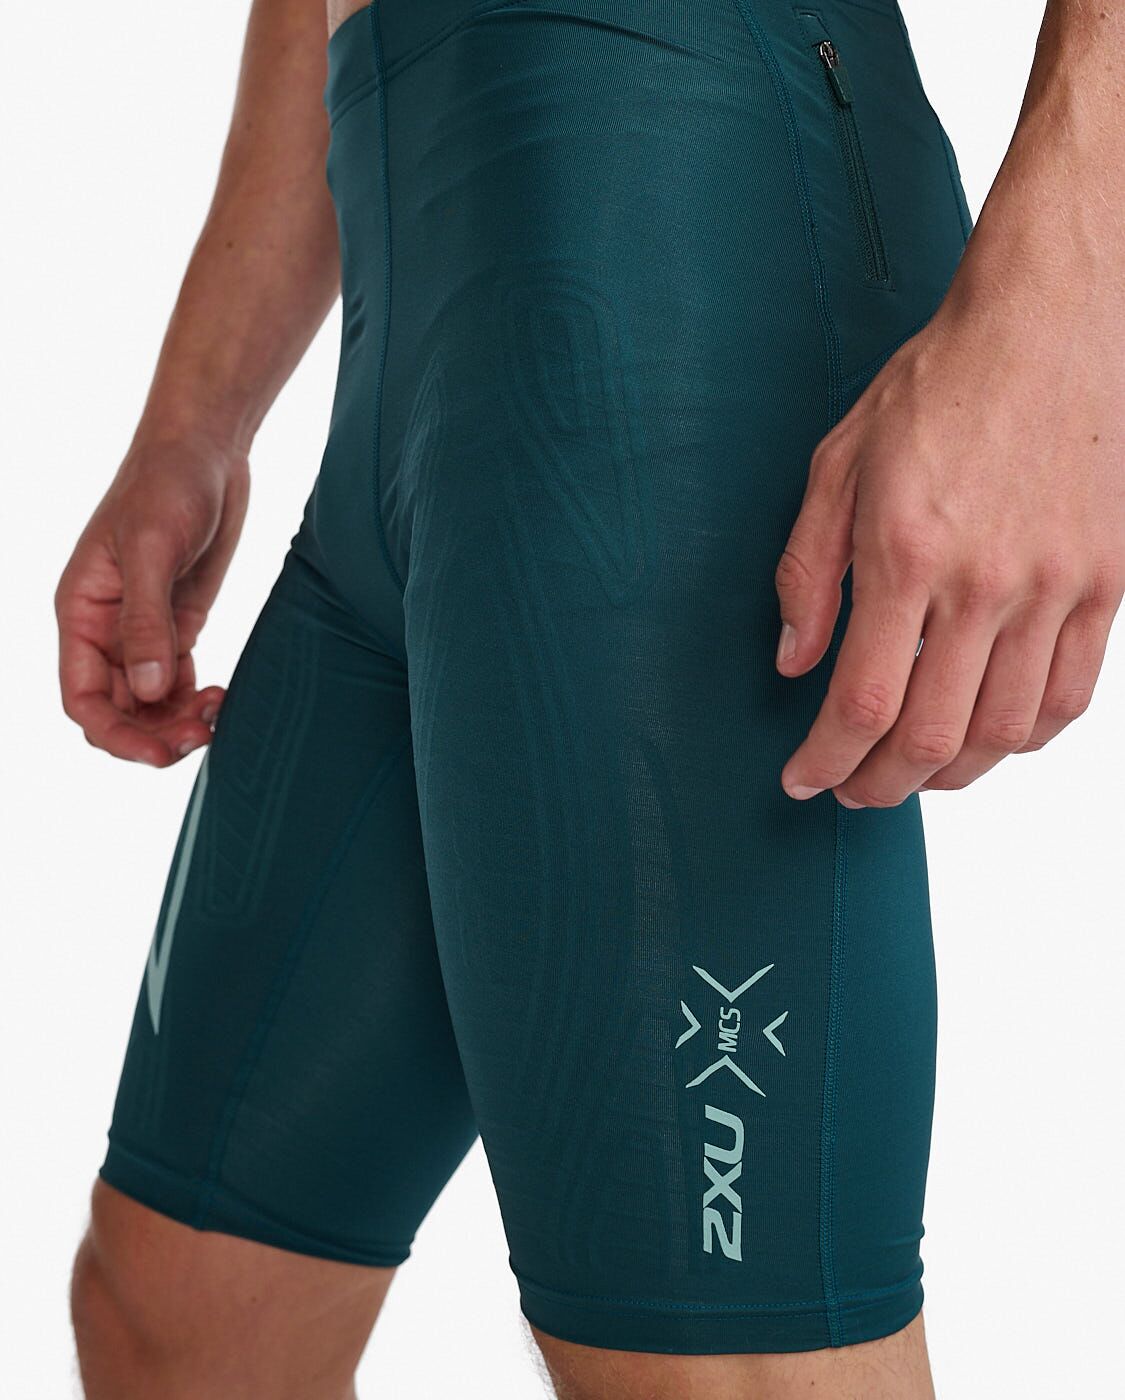 2XU South Africa - Men's Light Speed Compression Shorts - PNE/RFF